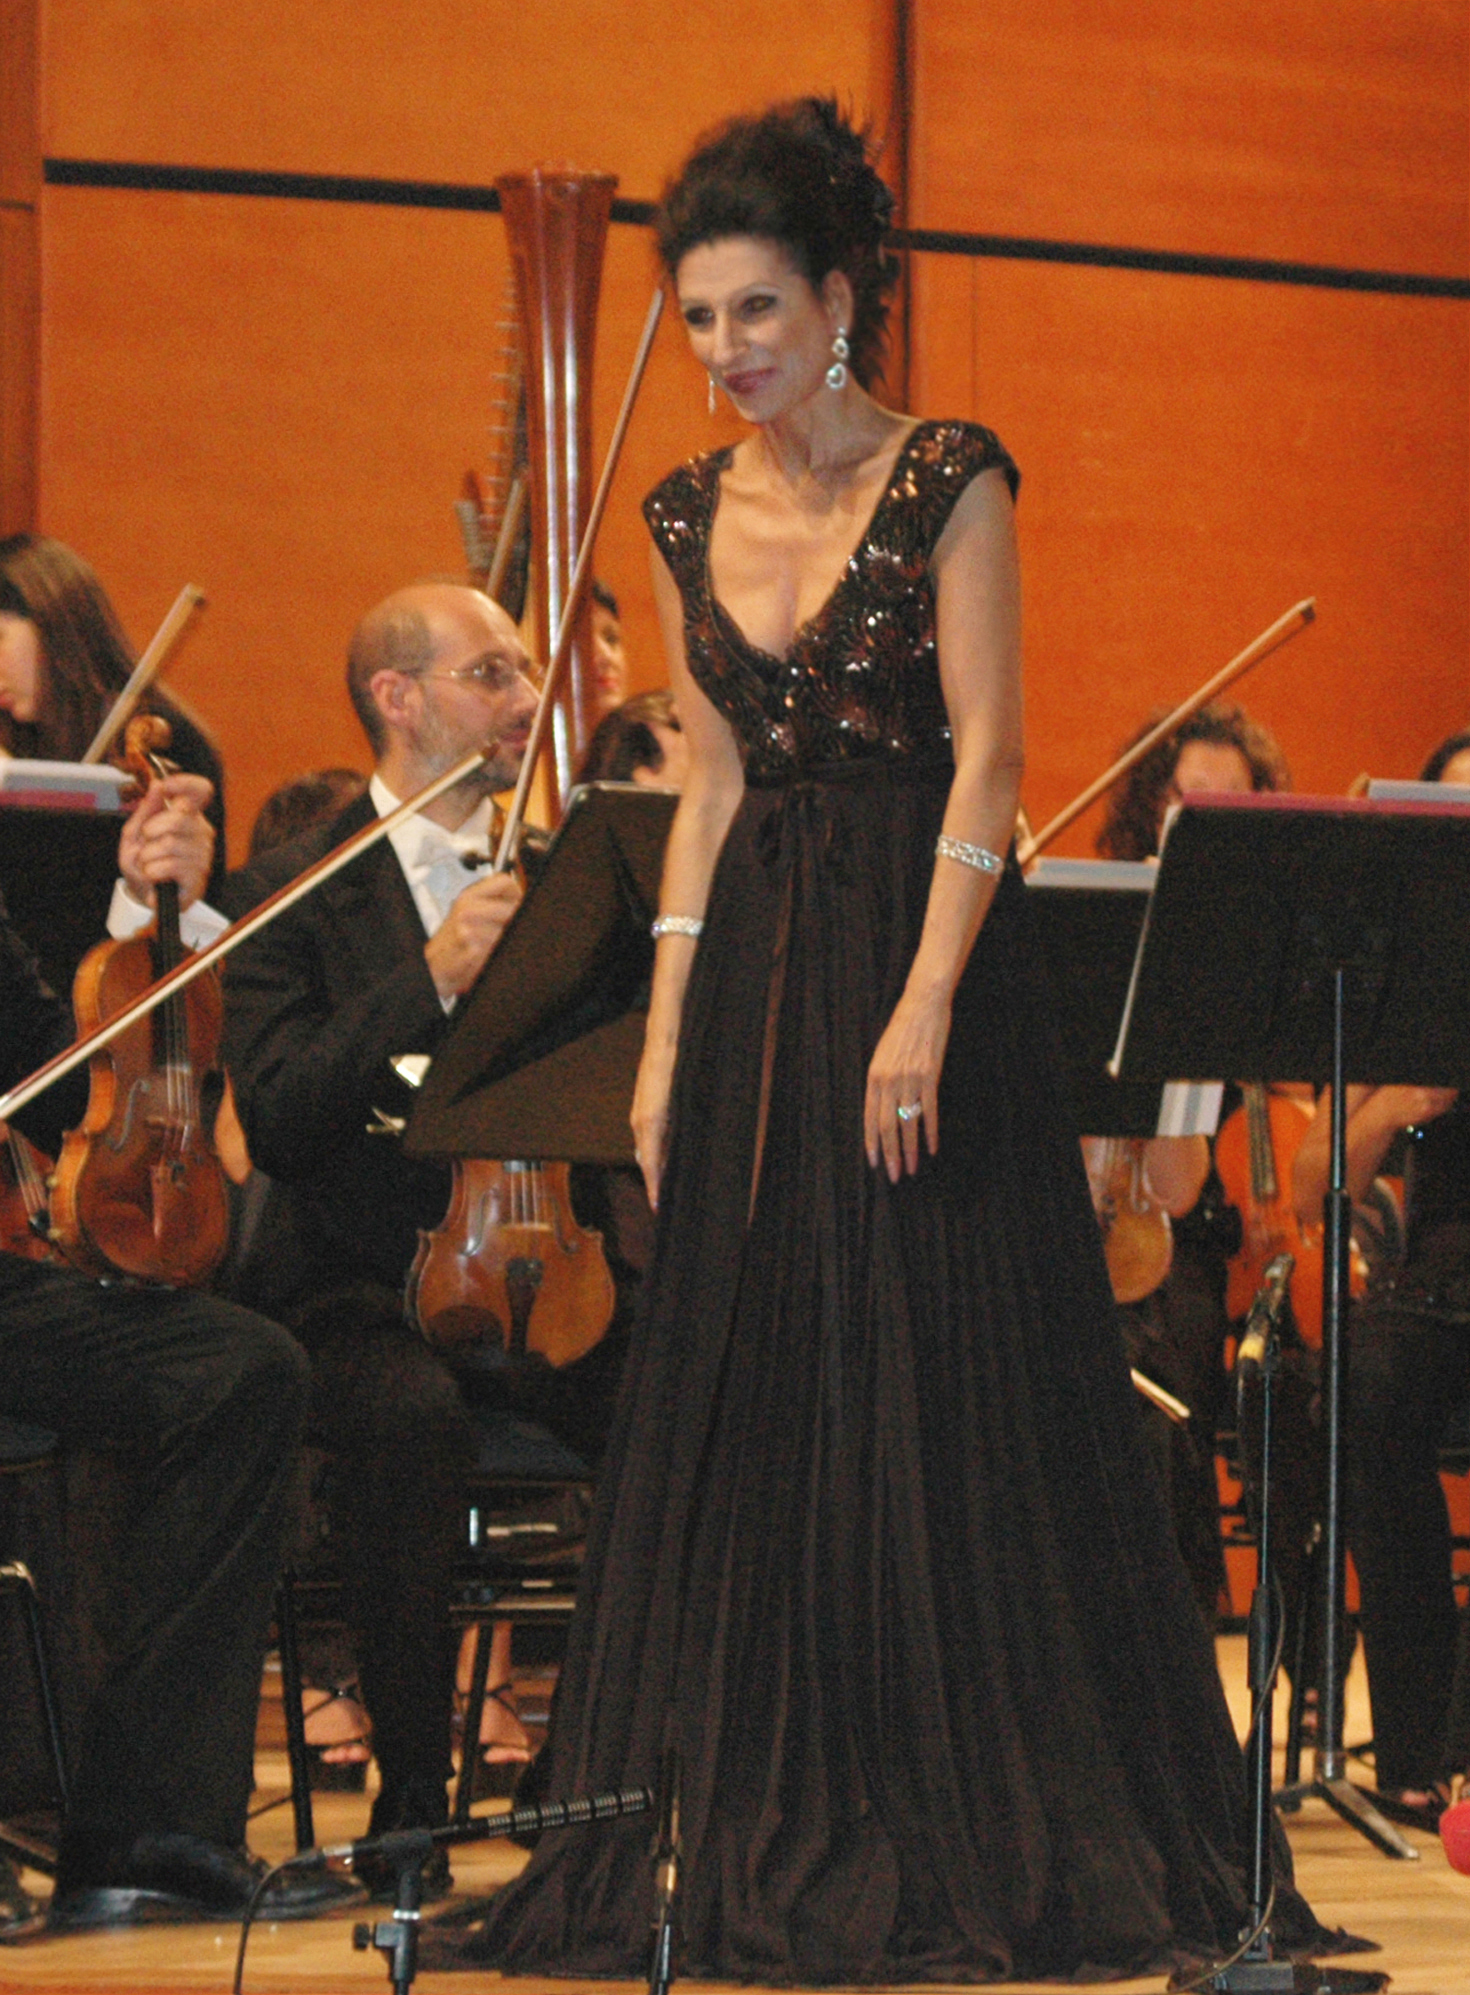 Lucia Aliberti⚘Auditorium⚘Milan⚘Concert⚘Orchestra Sinfonica Di Milano Giuseppe Verd⚘Milan⚘On Stage⚘Escada Fashion⚘:http://www.luciaaliberti.it #luciaaliberti #auditorium #orchestrasinfonicadimilanogiuseppeverdi #concert #milan #onstage #escadafashion